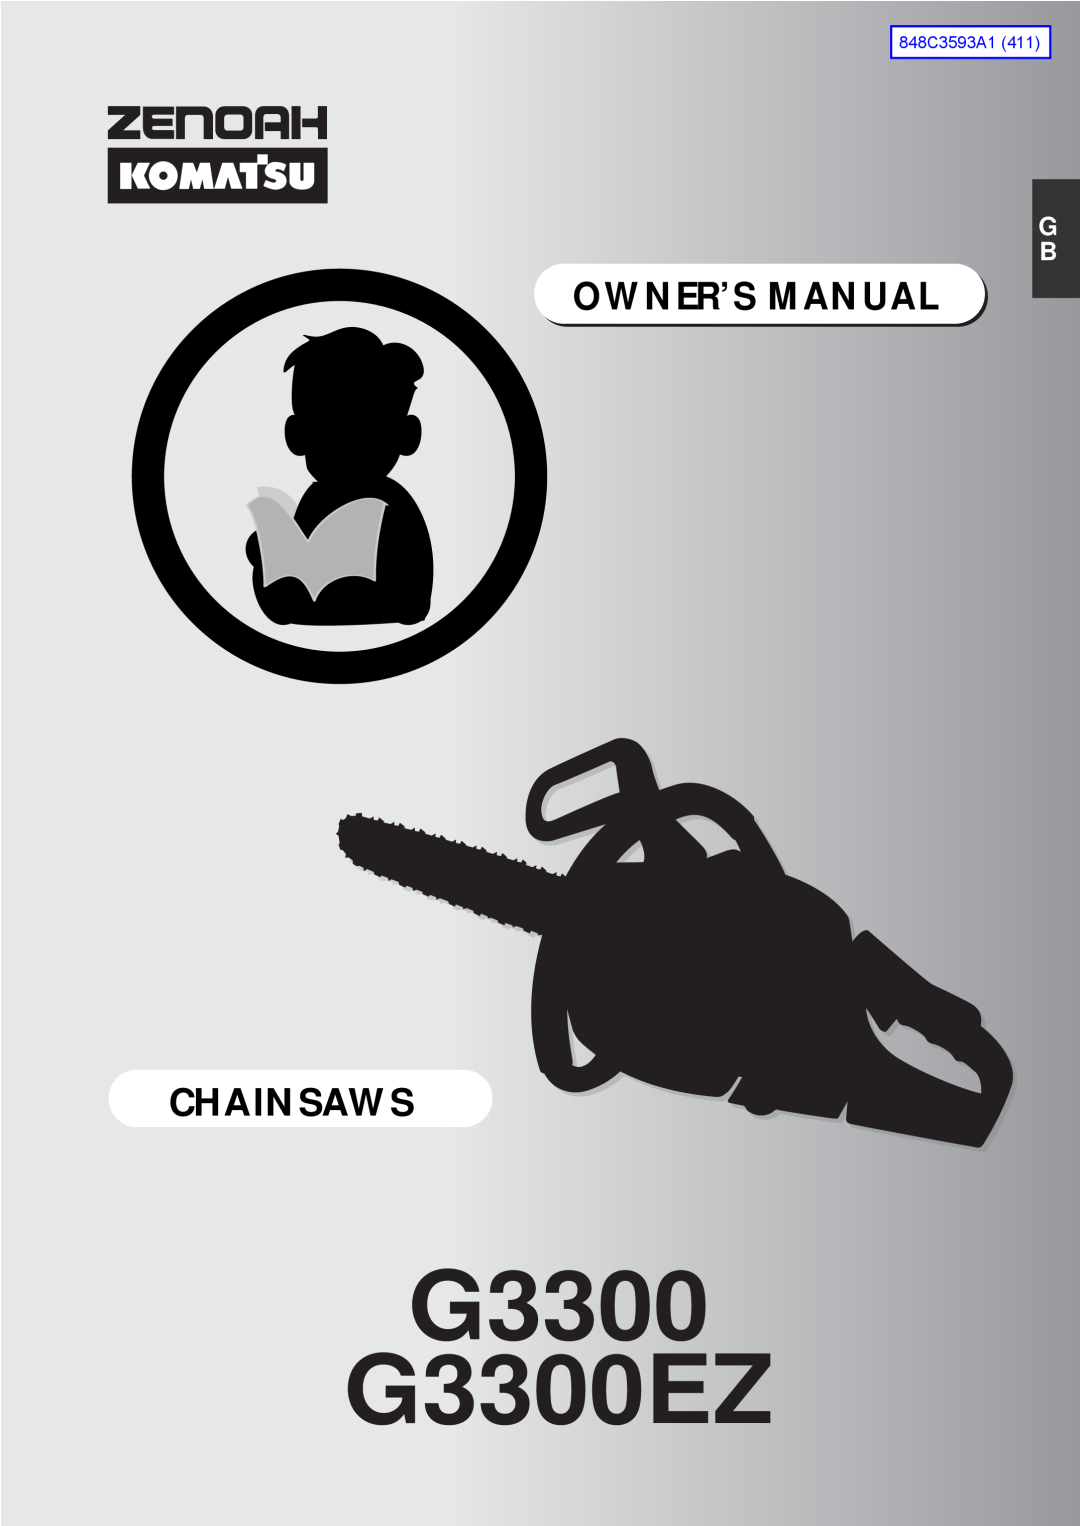 Zenoah owner manual G3300 G3300EZ, Chainsaws, 848C3593A1 